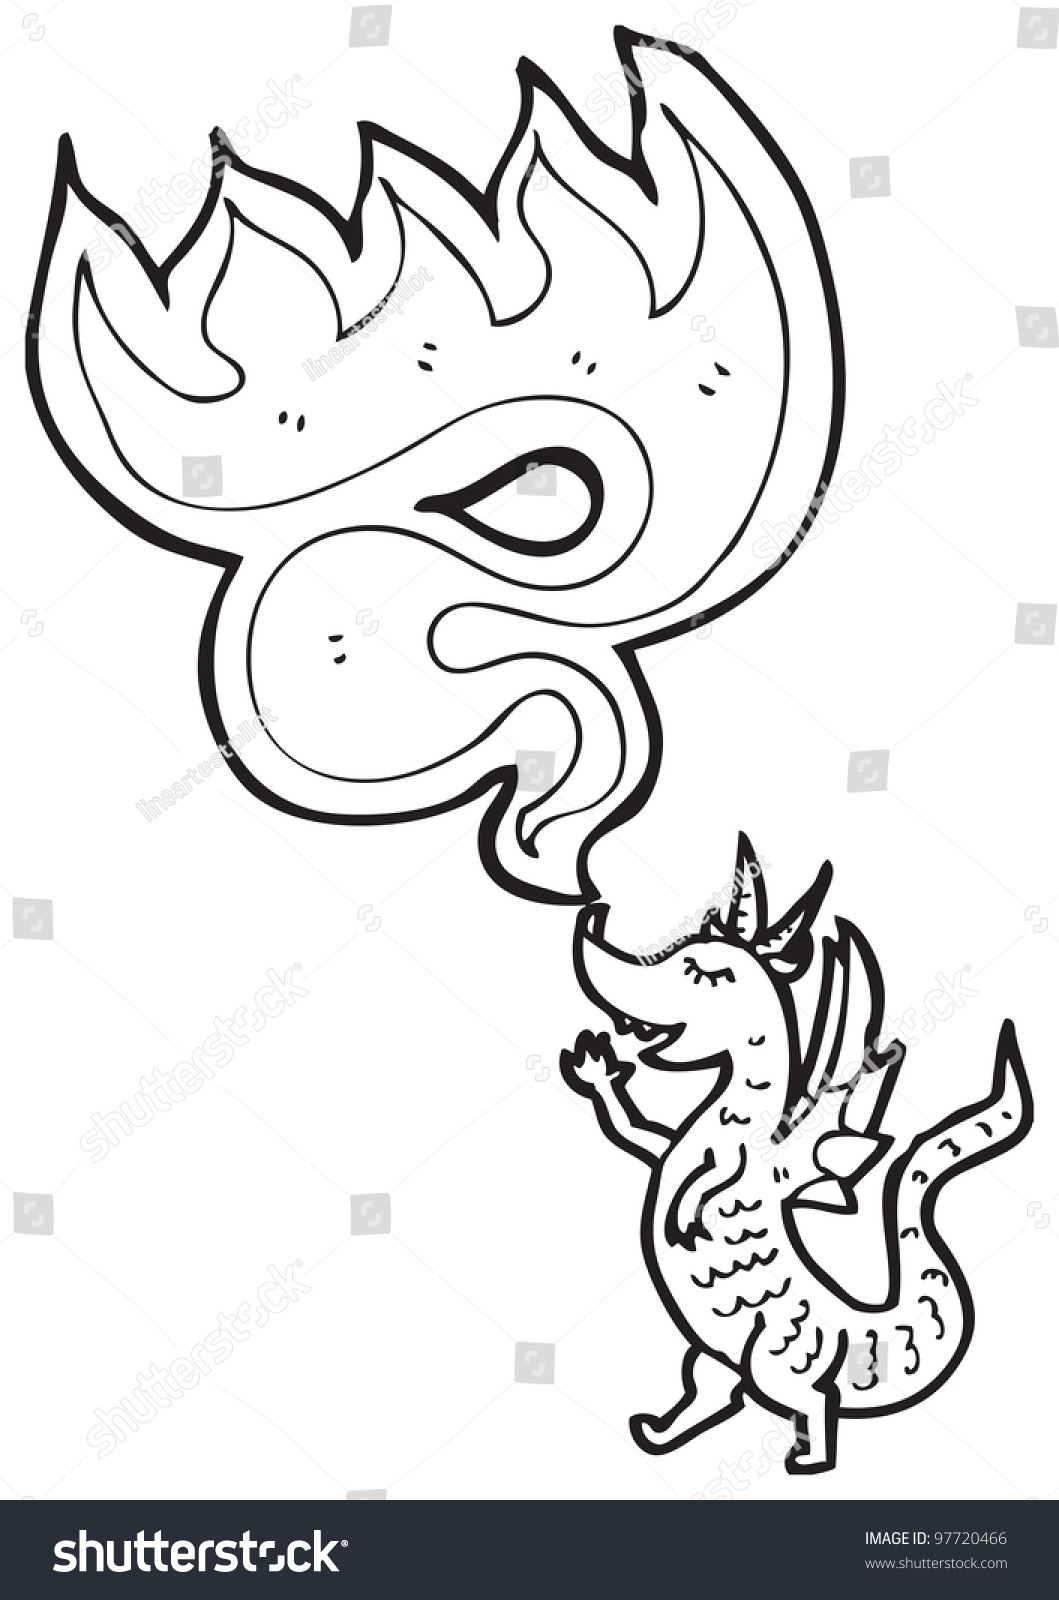 Fire Breathing Dragon Cartoon Stock Illustration 97720466 Shutterstock 1224